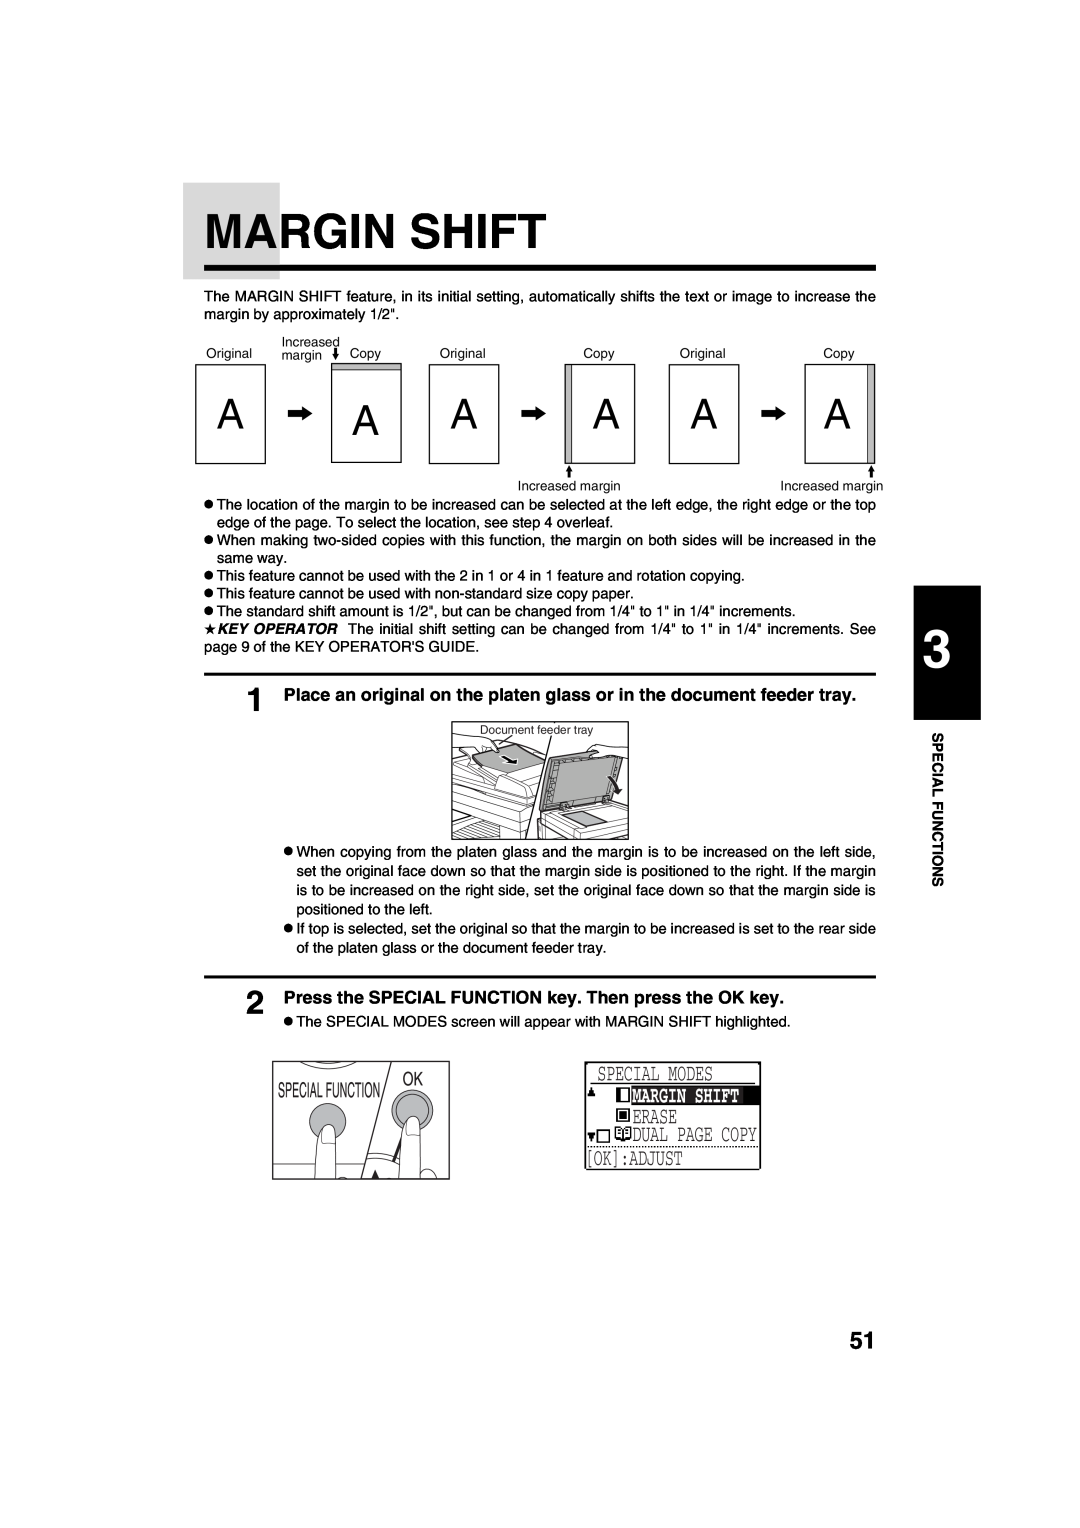 Sharp AR-M208 operation manual Margin Shift, Special Modes, Erase, Dual Page Copy Okadjust 